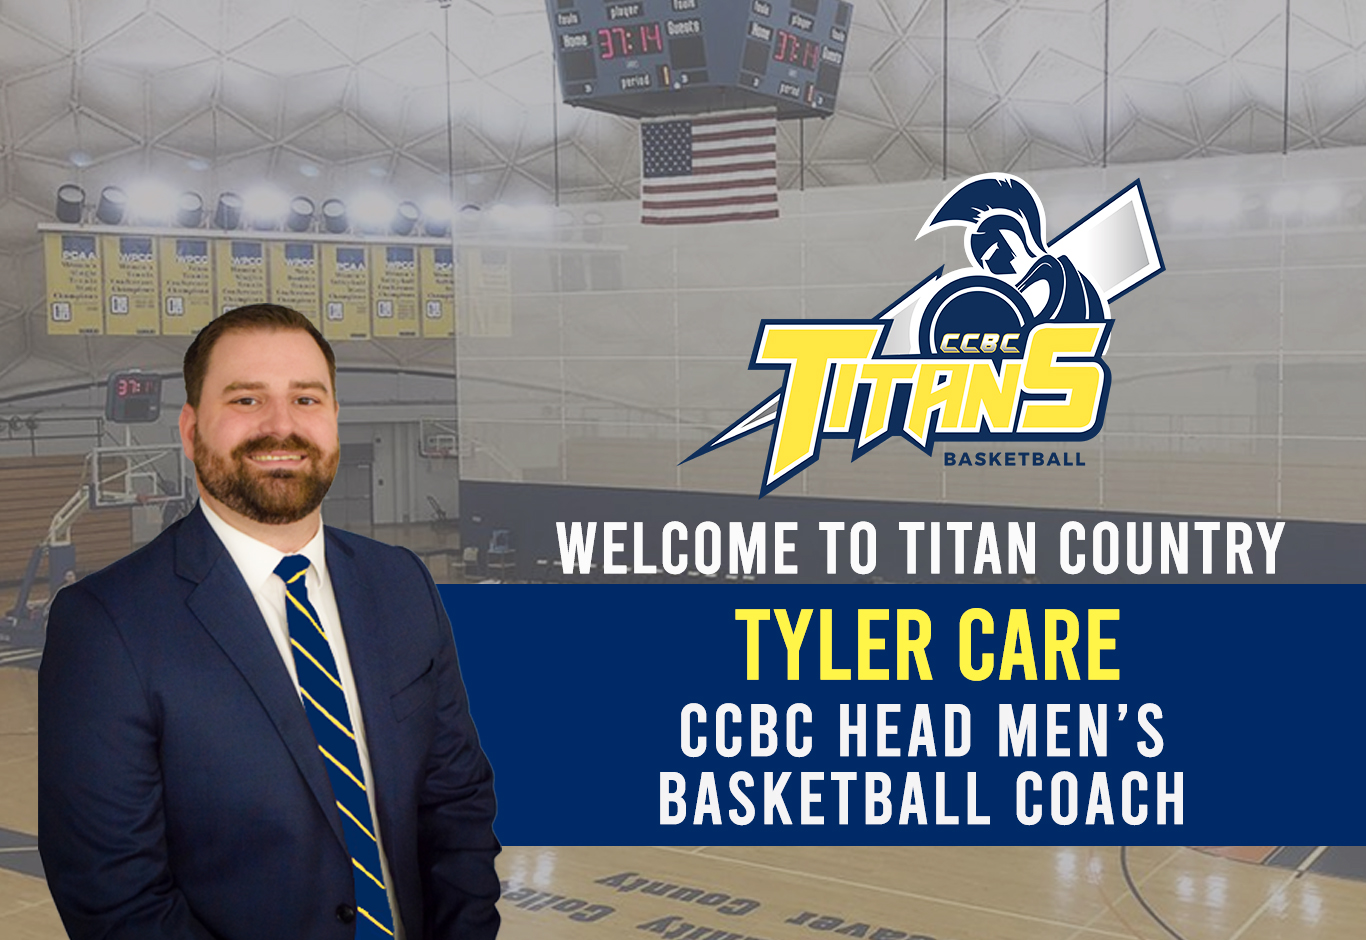 CCBC NAMES TYLER CARE AS MEN&rsquo;S BASKETBALL HEAD COACH